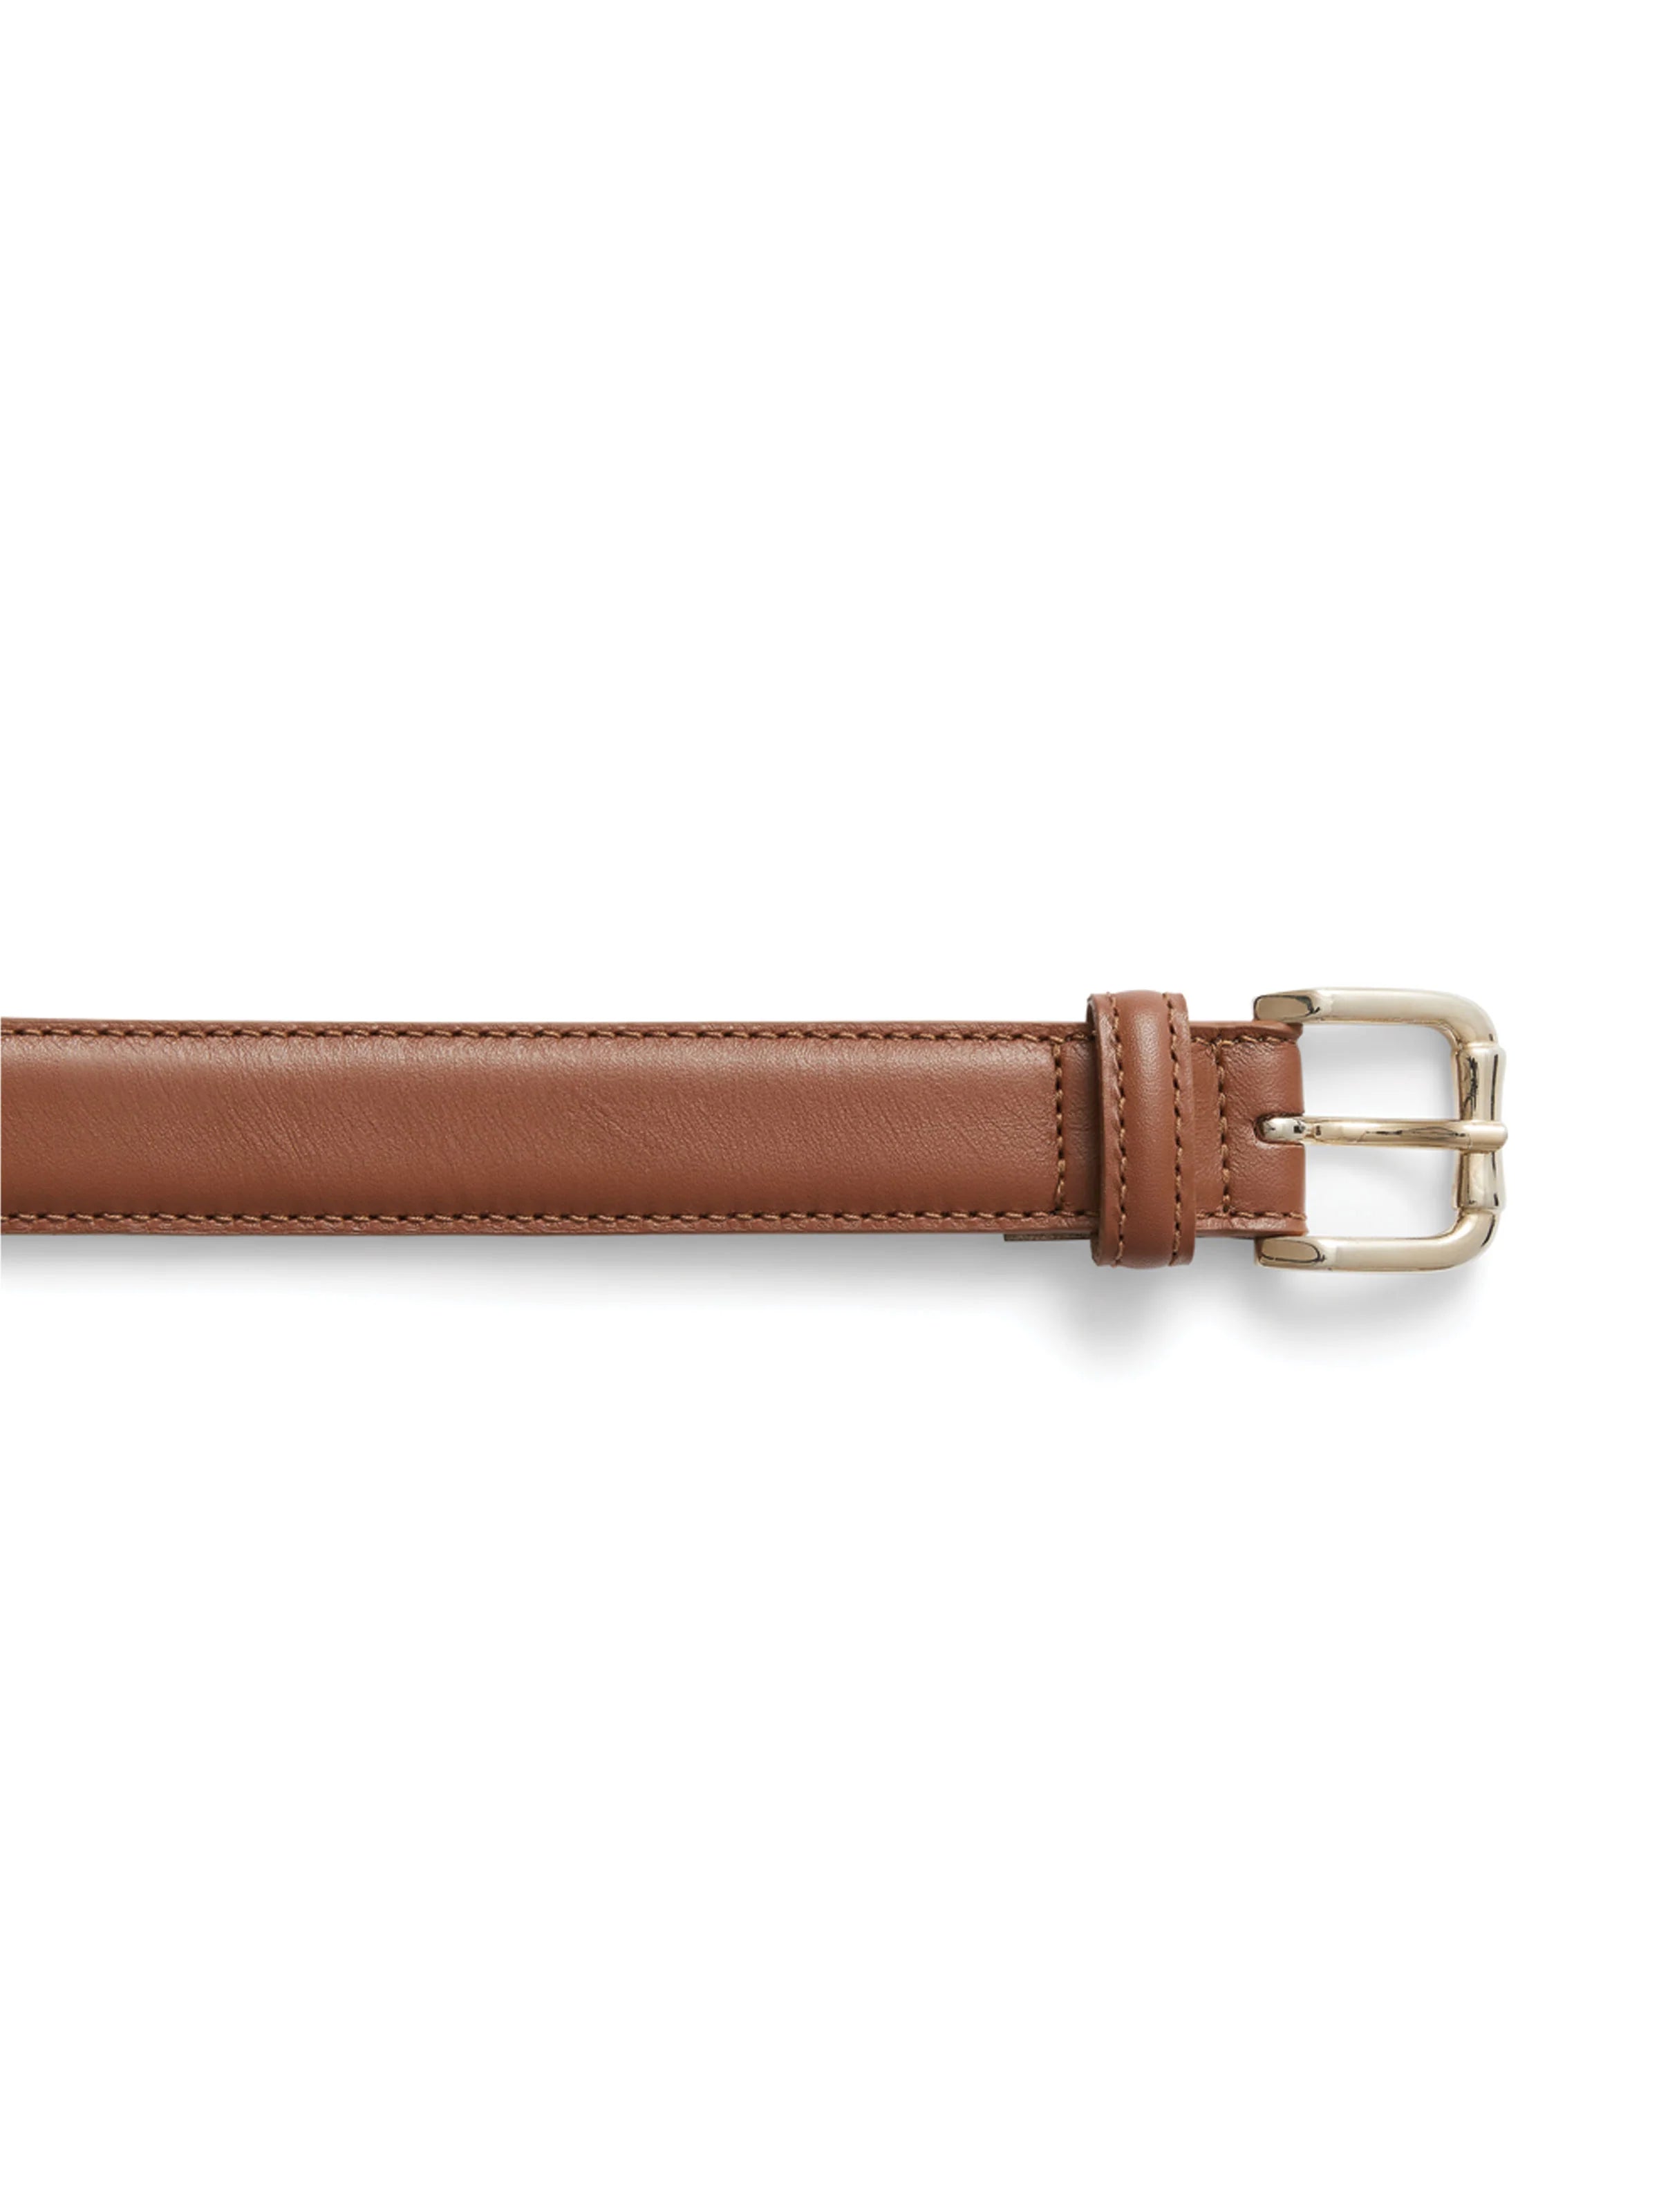 The Moulton Belt - Tan Leather